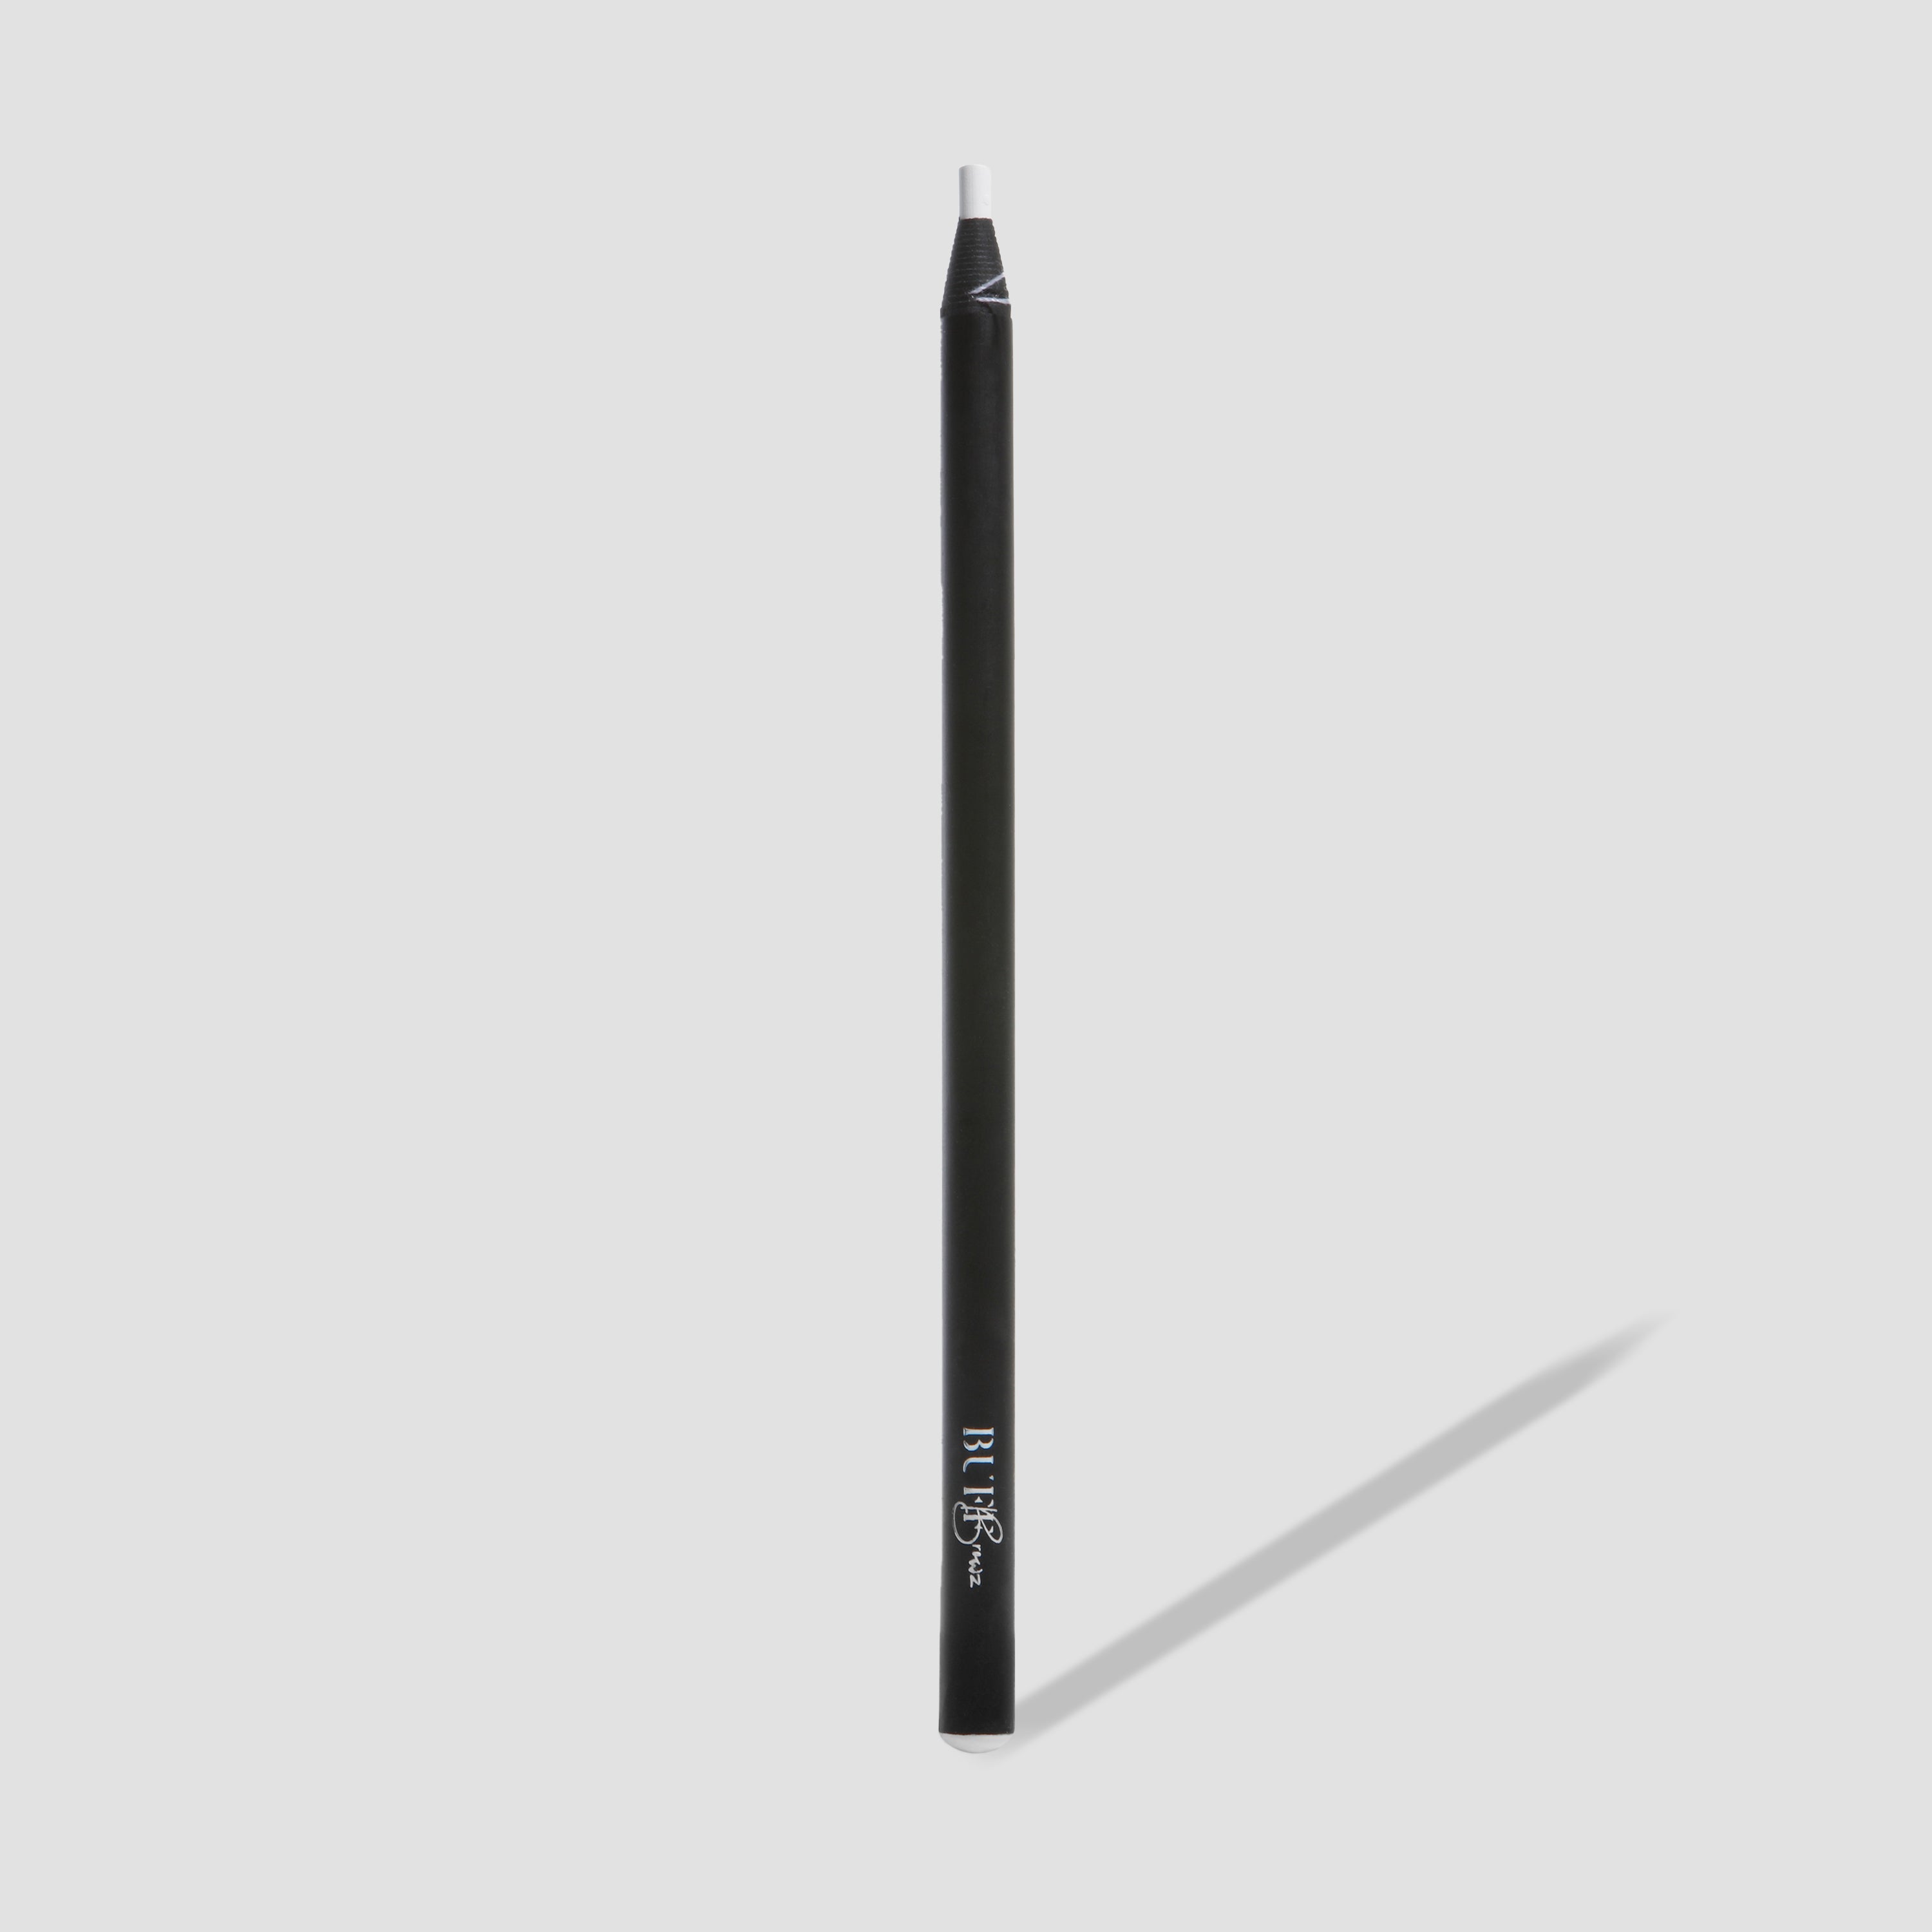 The Brow Designer Pencil